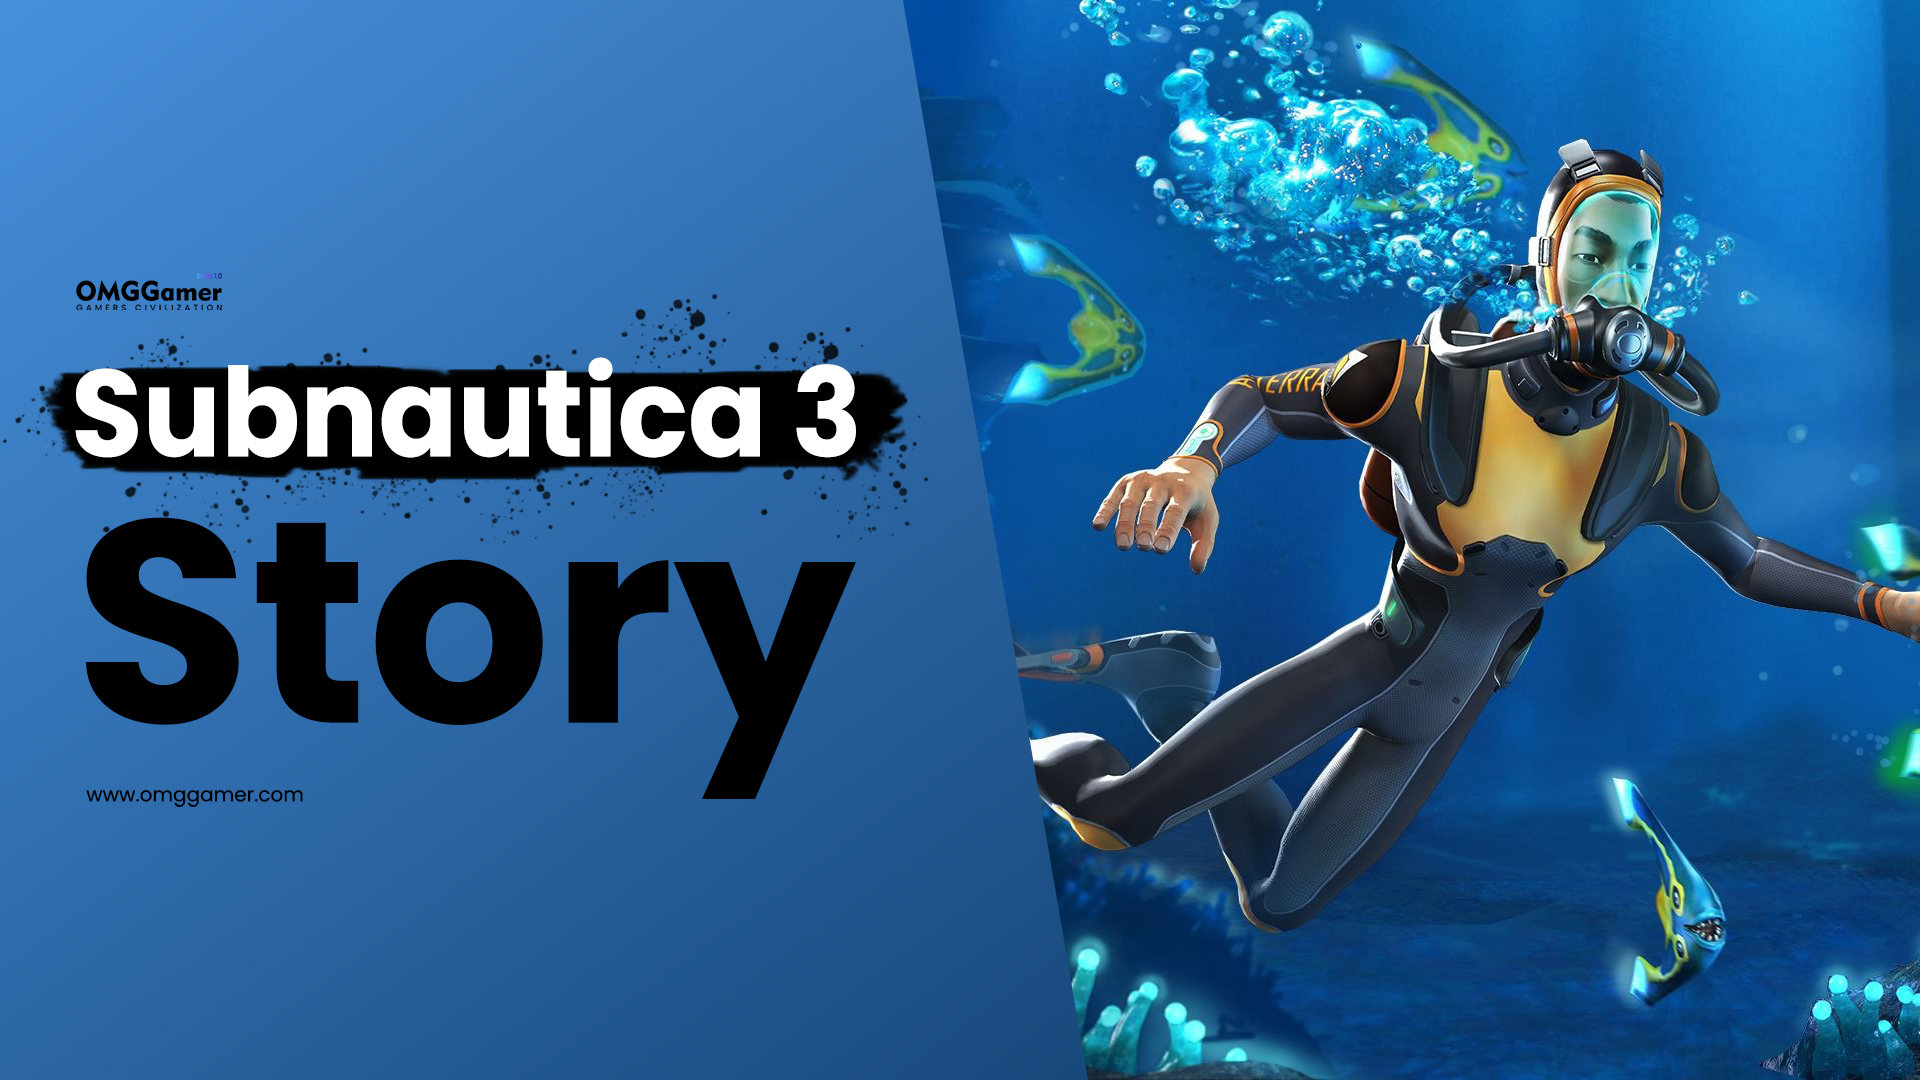 Subnautica 3 Story